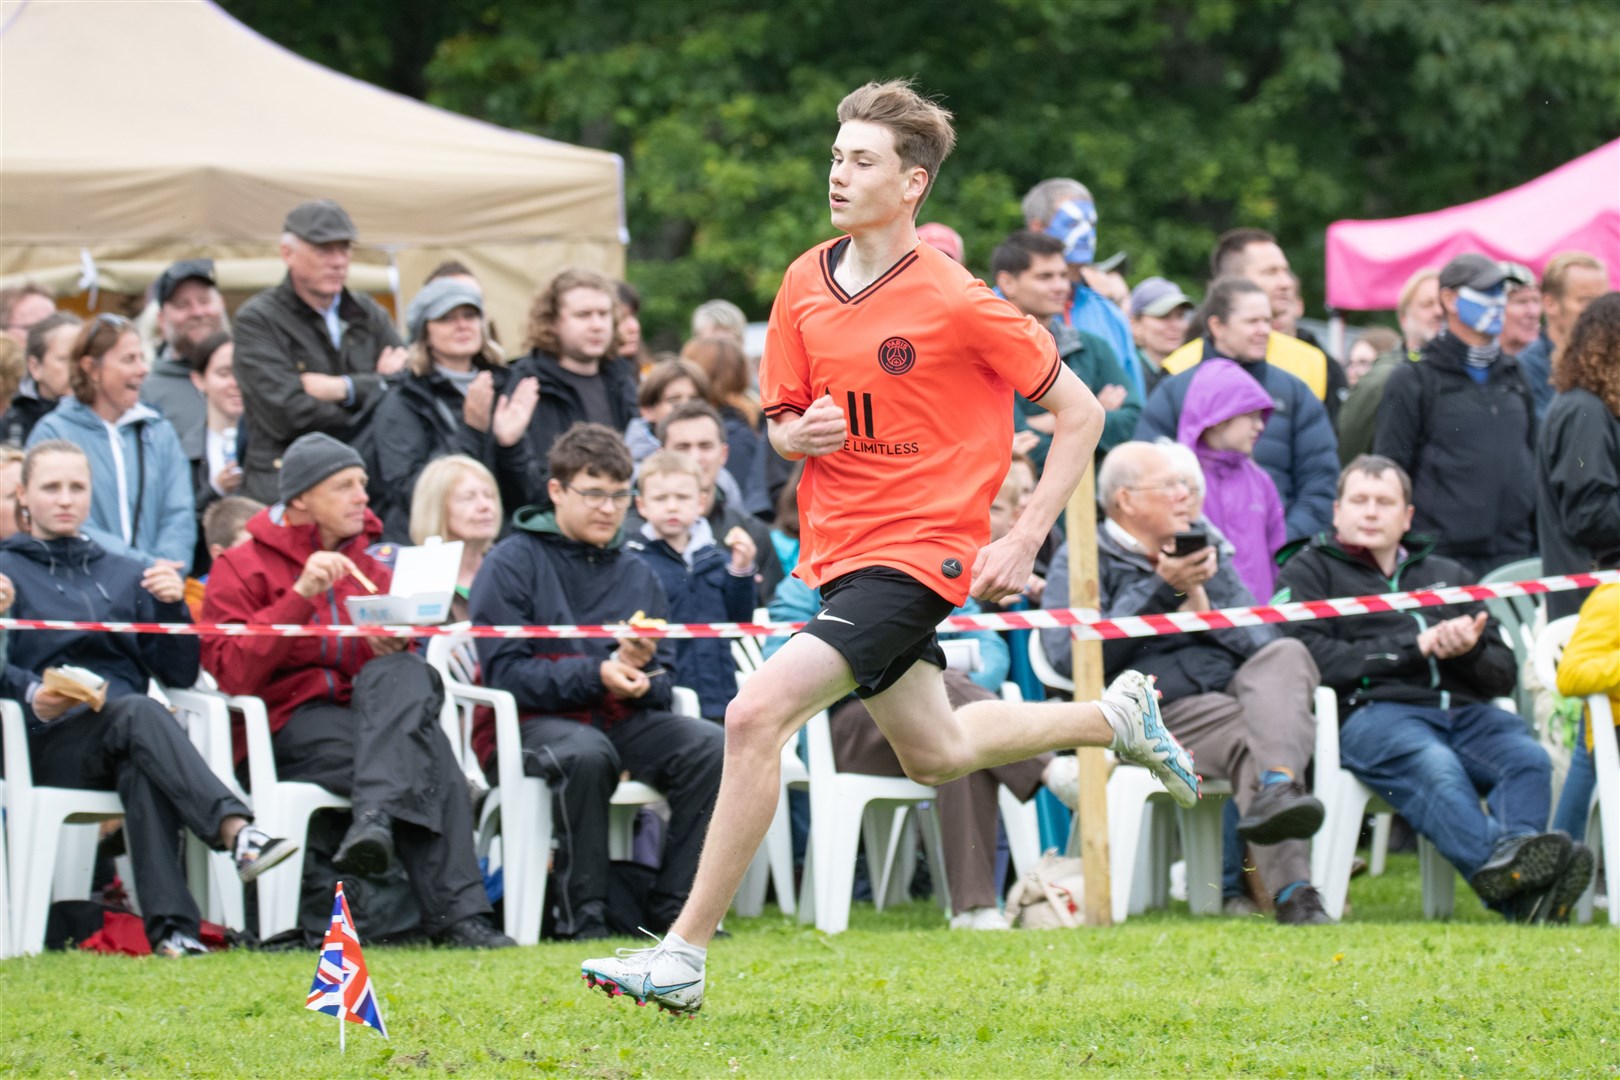 Andrew Lumsden on his way to winning the 200 metres men's race. Picture: Daniel Forsyth